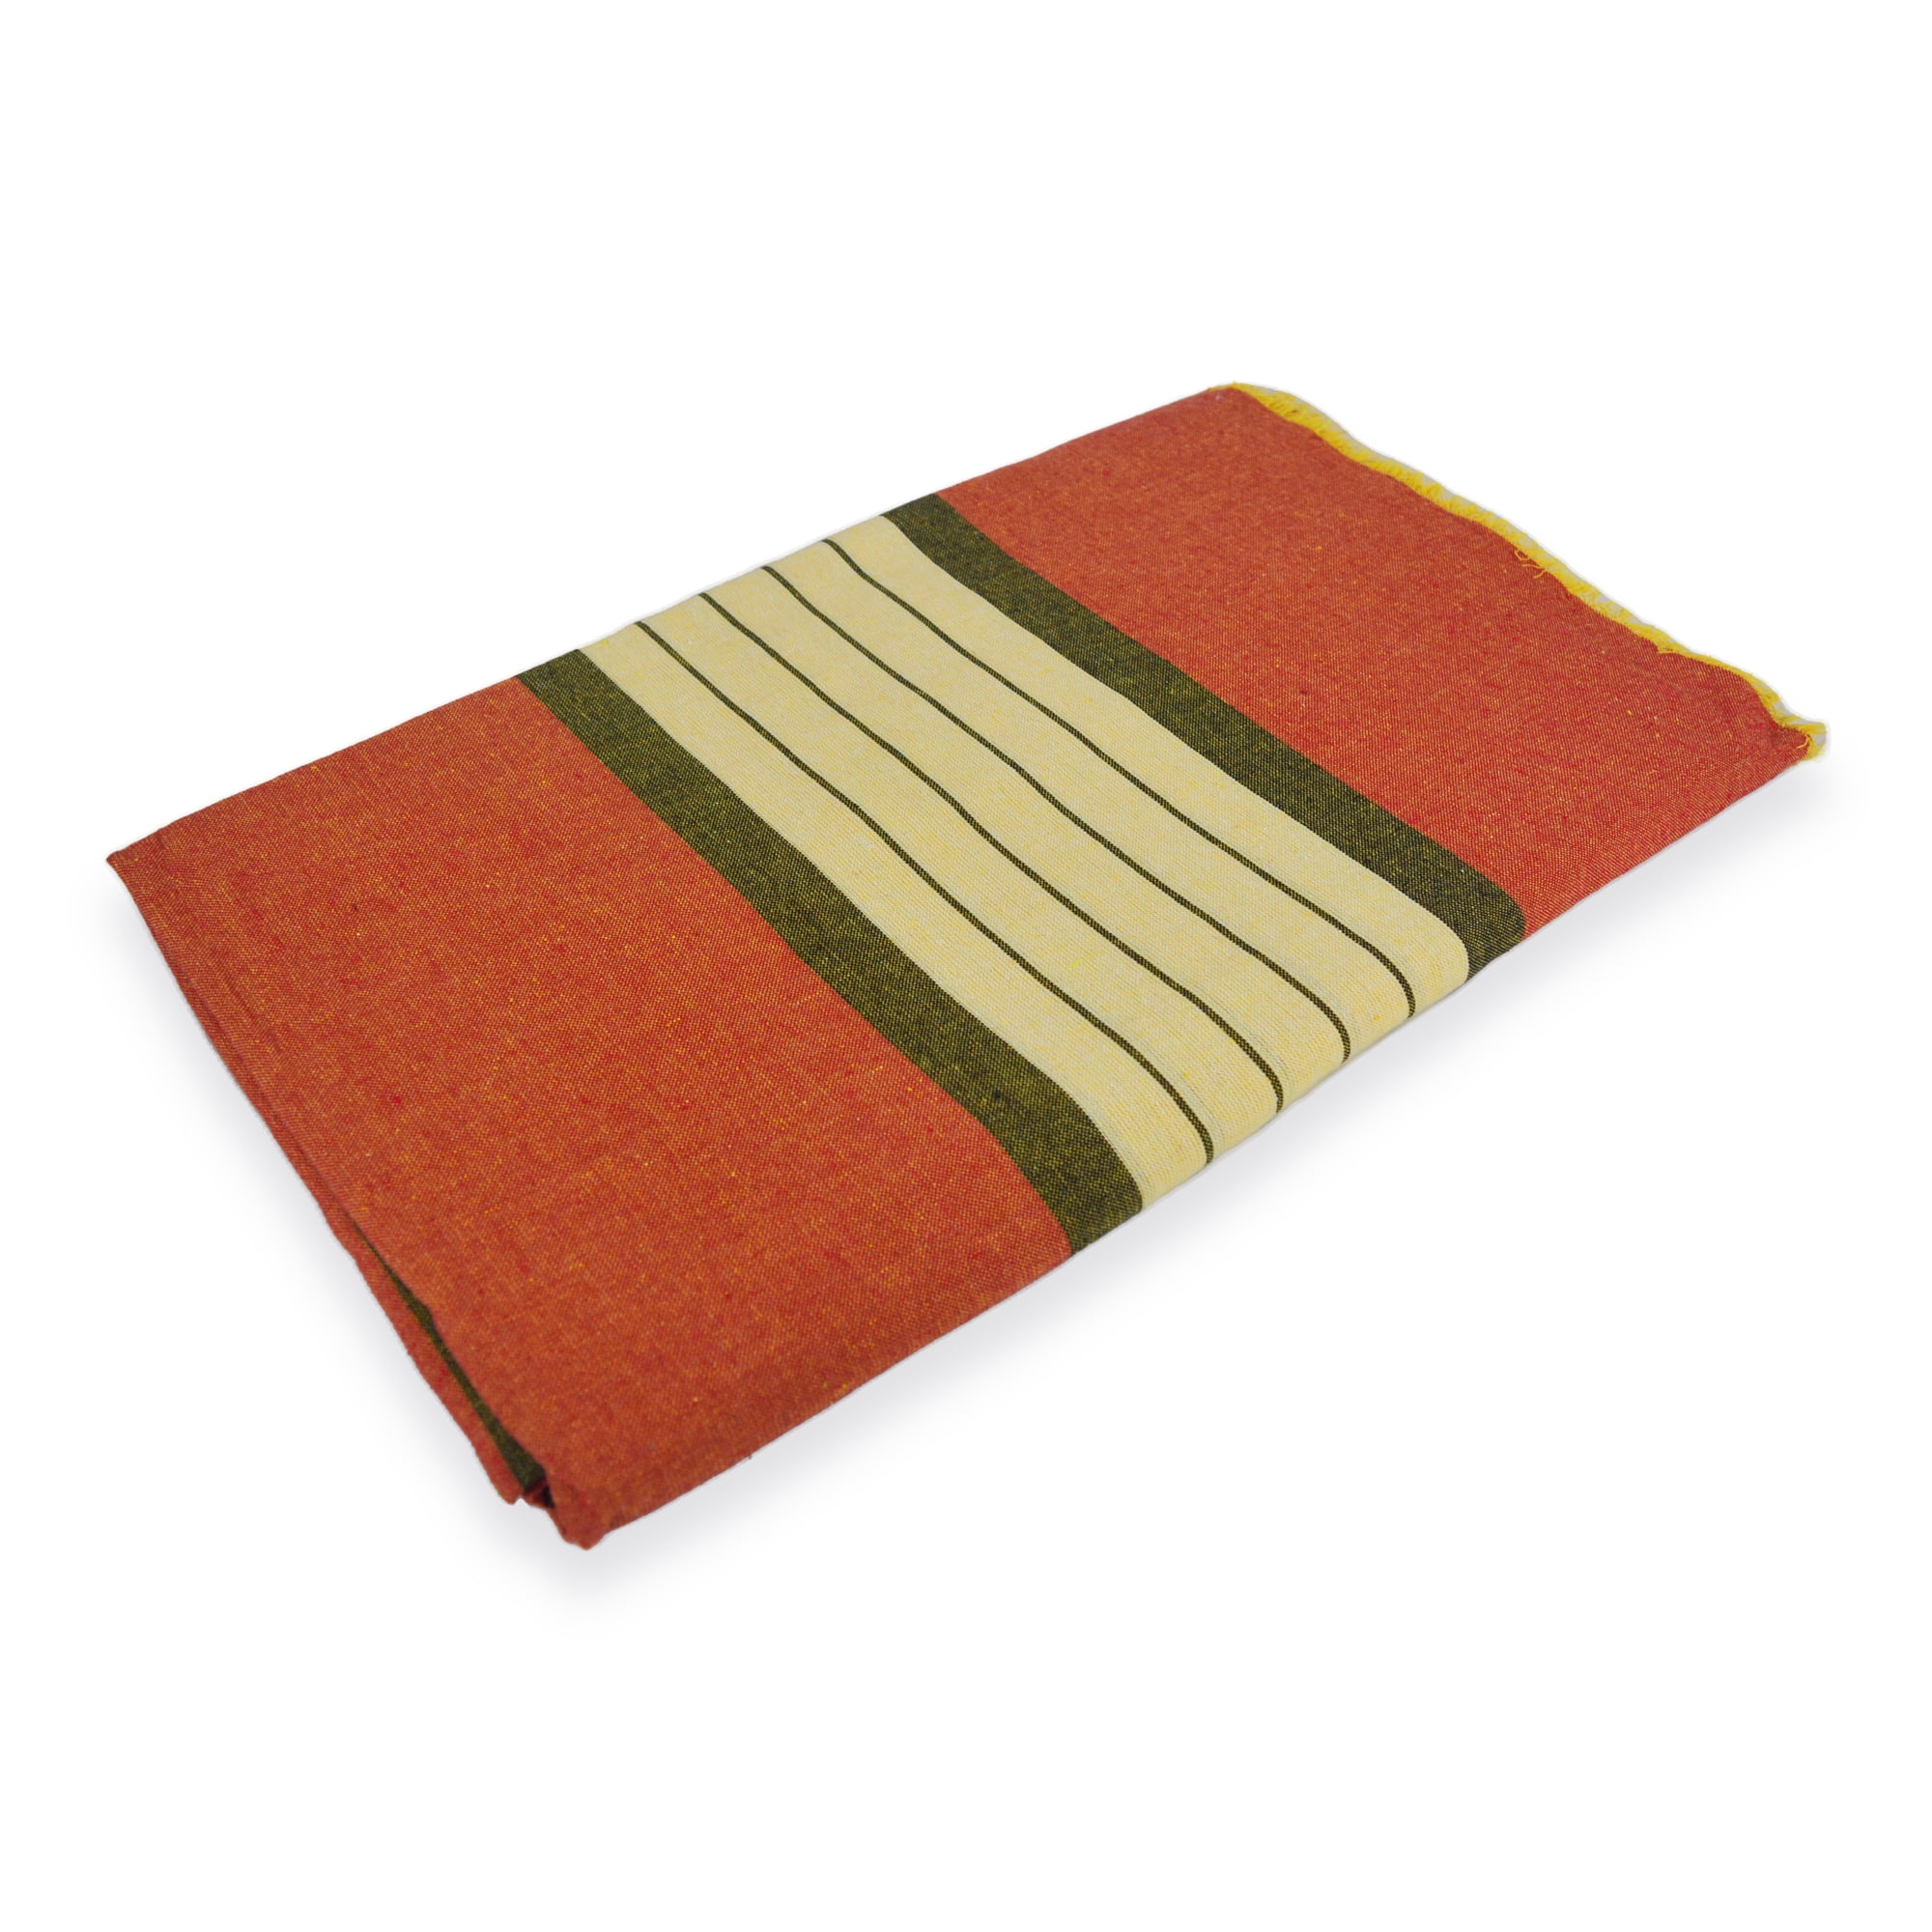 Cotton Handloom Bed Sheet 72x90 (Inches) for Queen, Double & Single Beds Dark Orange